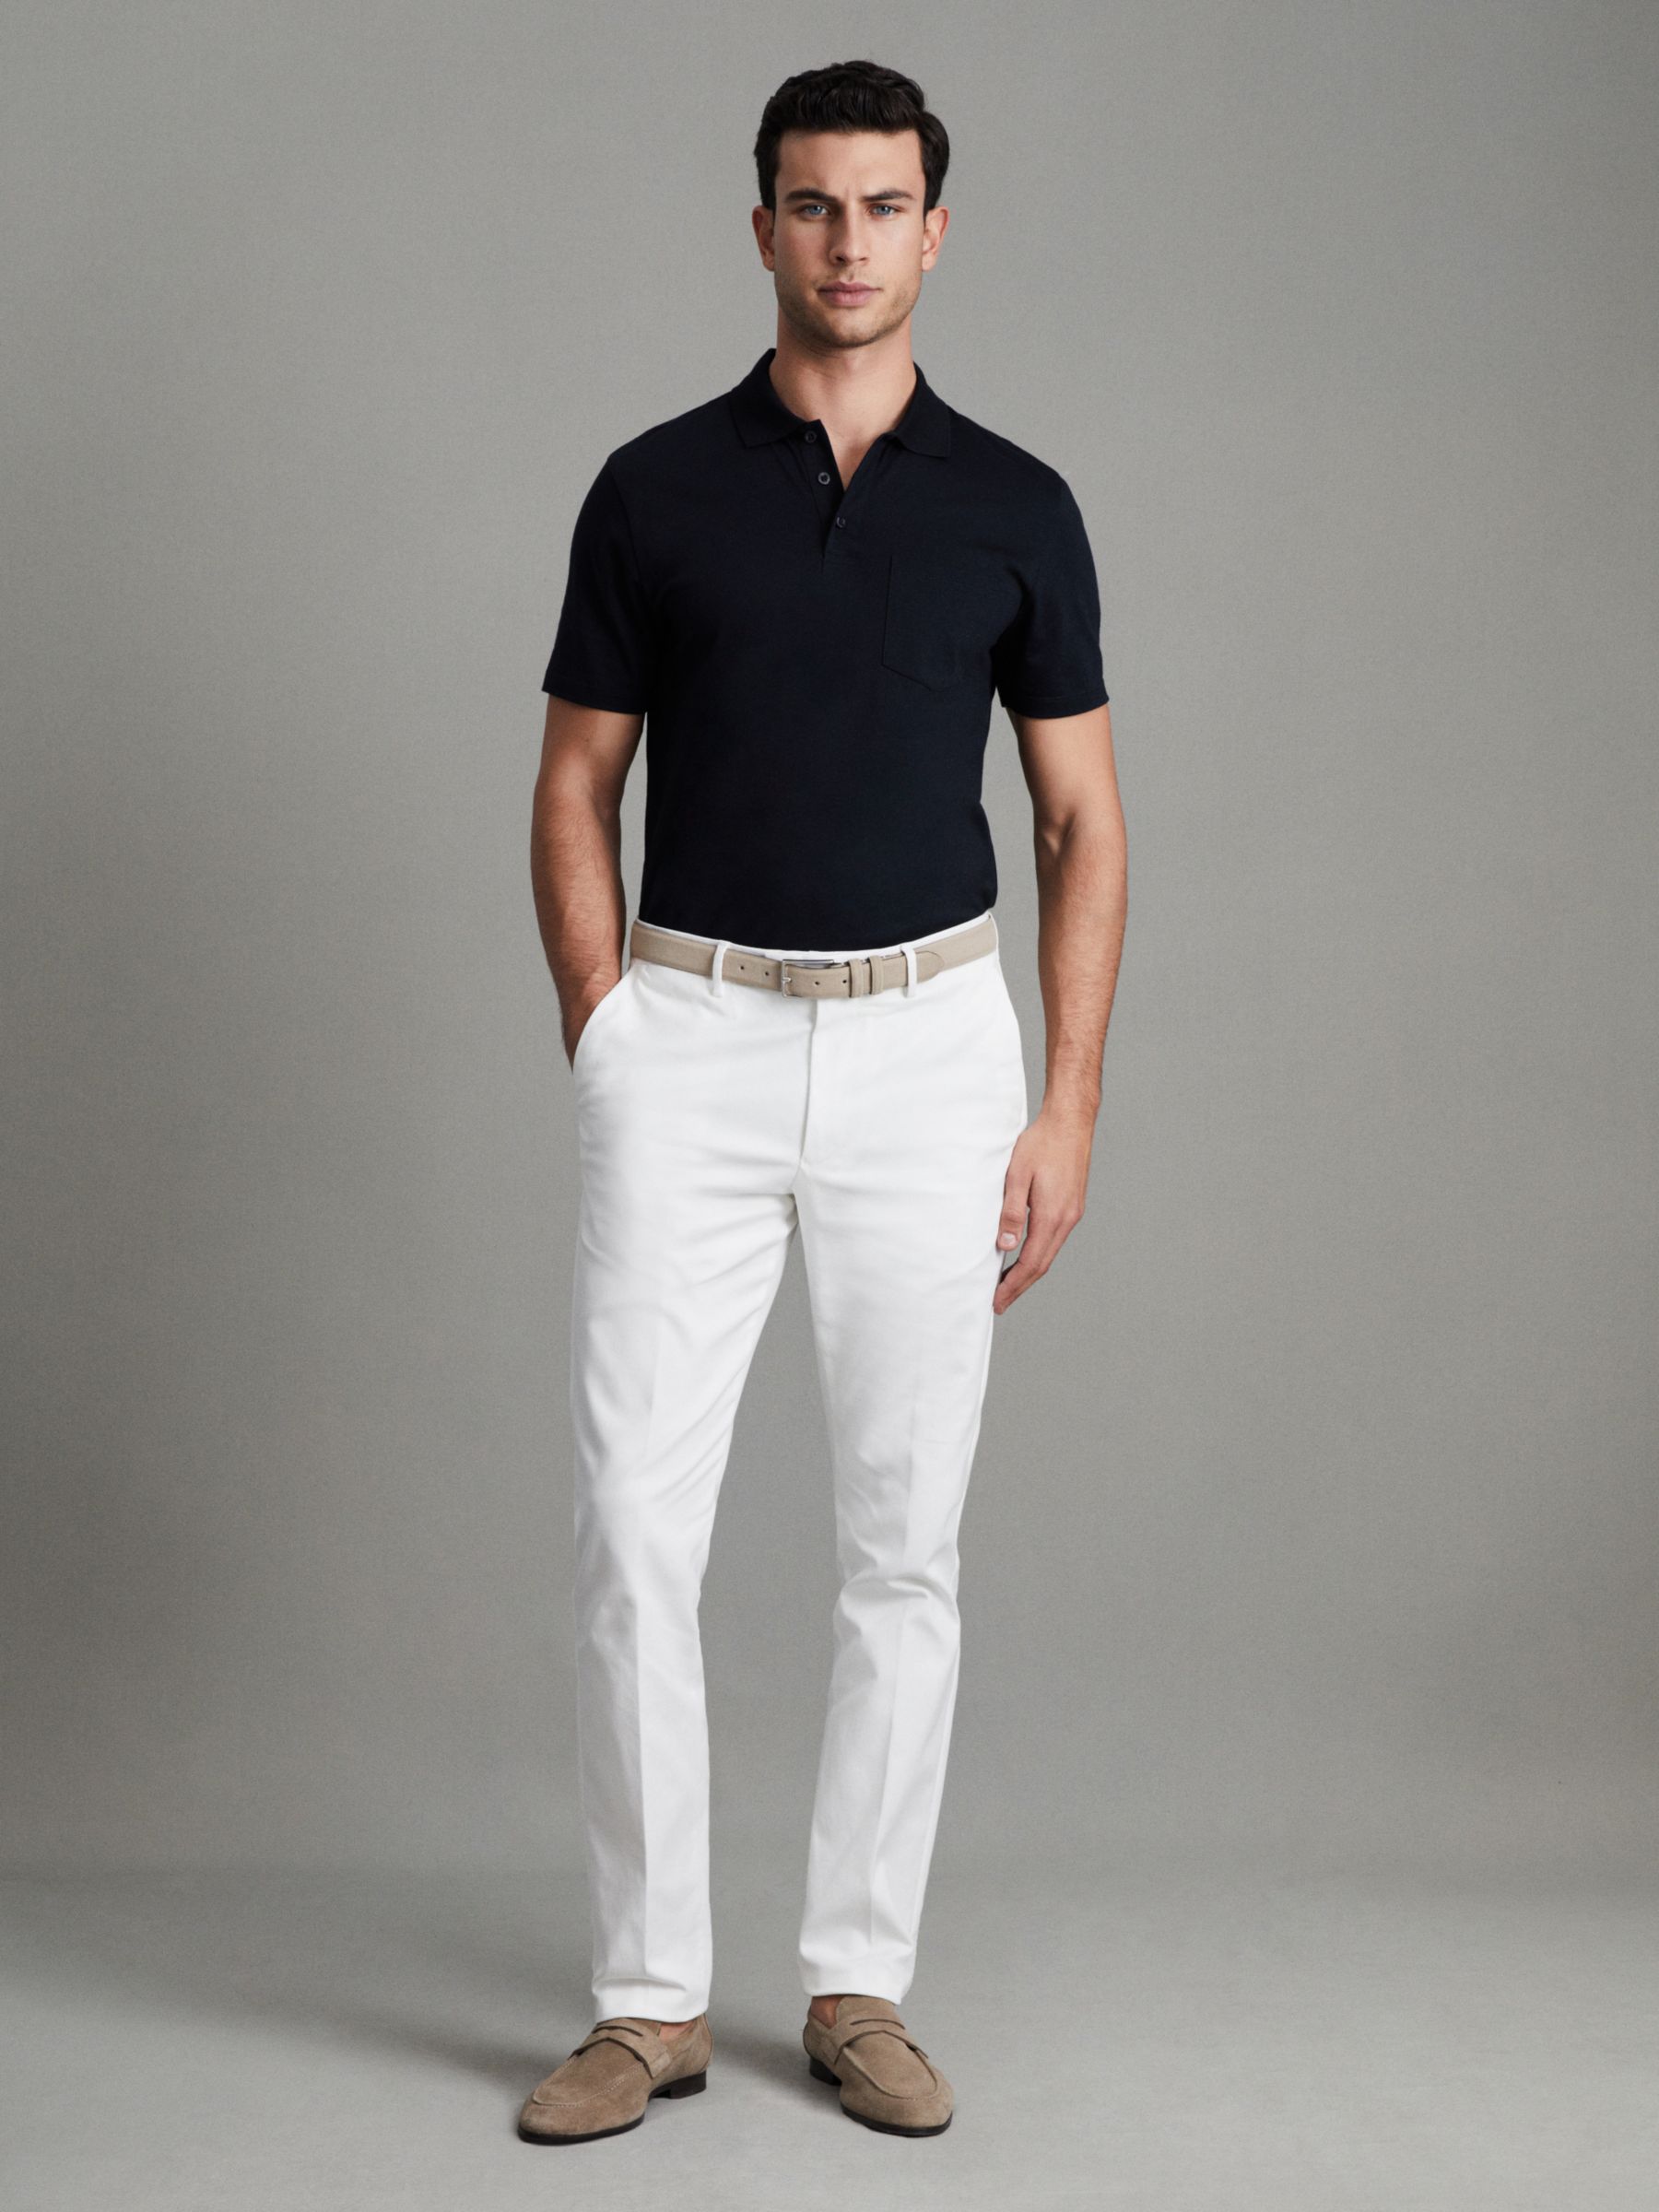 Reiss Austin Short Sleeve Cotton Polo Shirt, Navy, XS